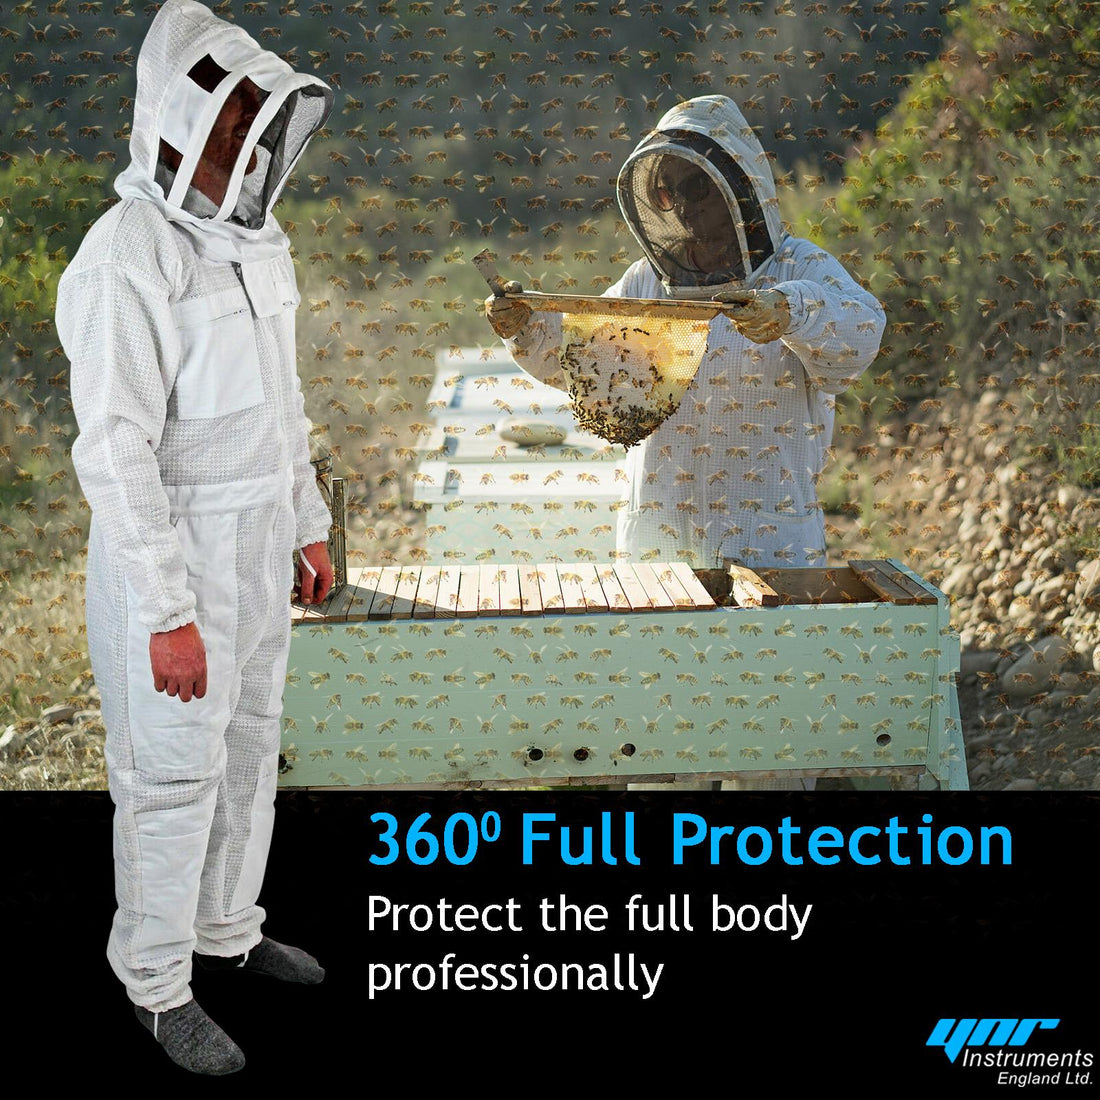 Ventilated Beekeeping Bee Suit, Beekeeper Suit For Professional Beekeepers, Fencing Beekeeping Veil, Comfortable, Sting proof Anti Wasp Suit